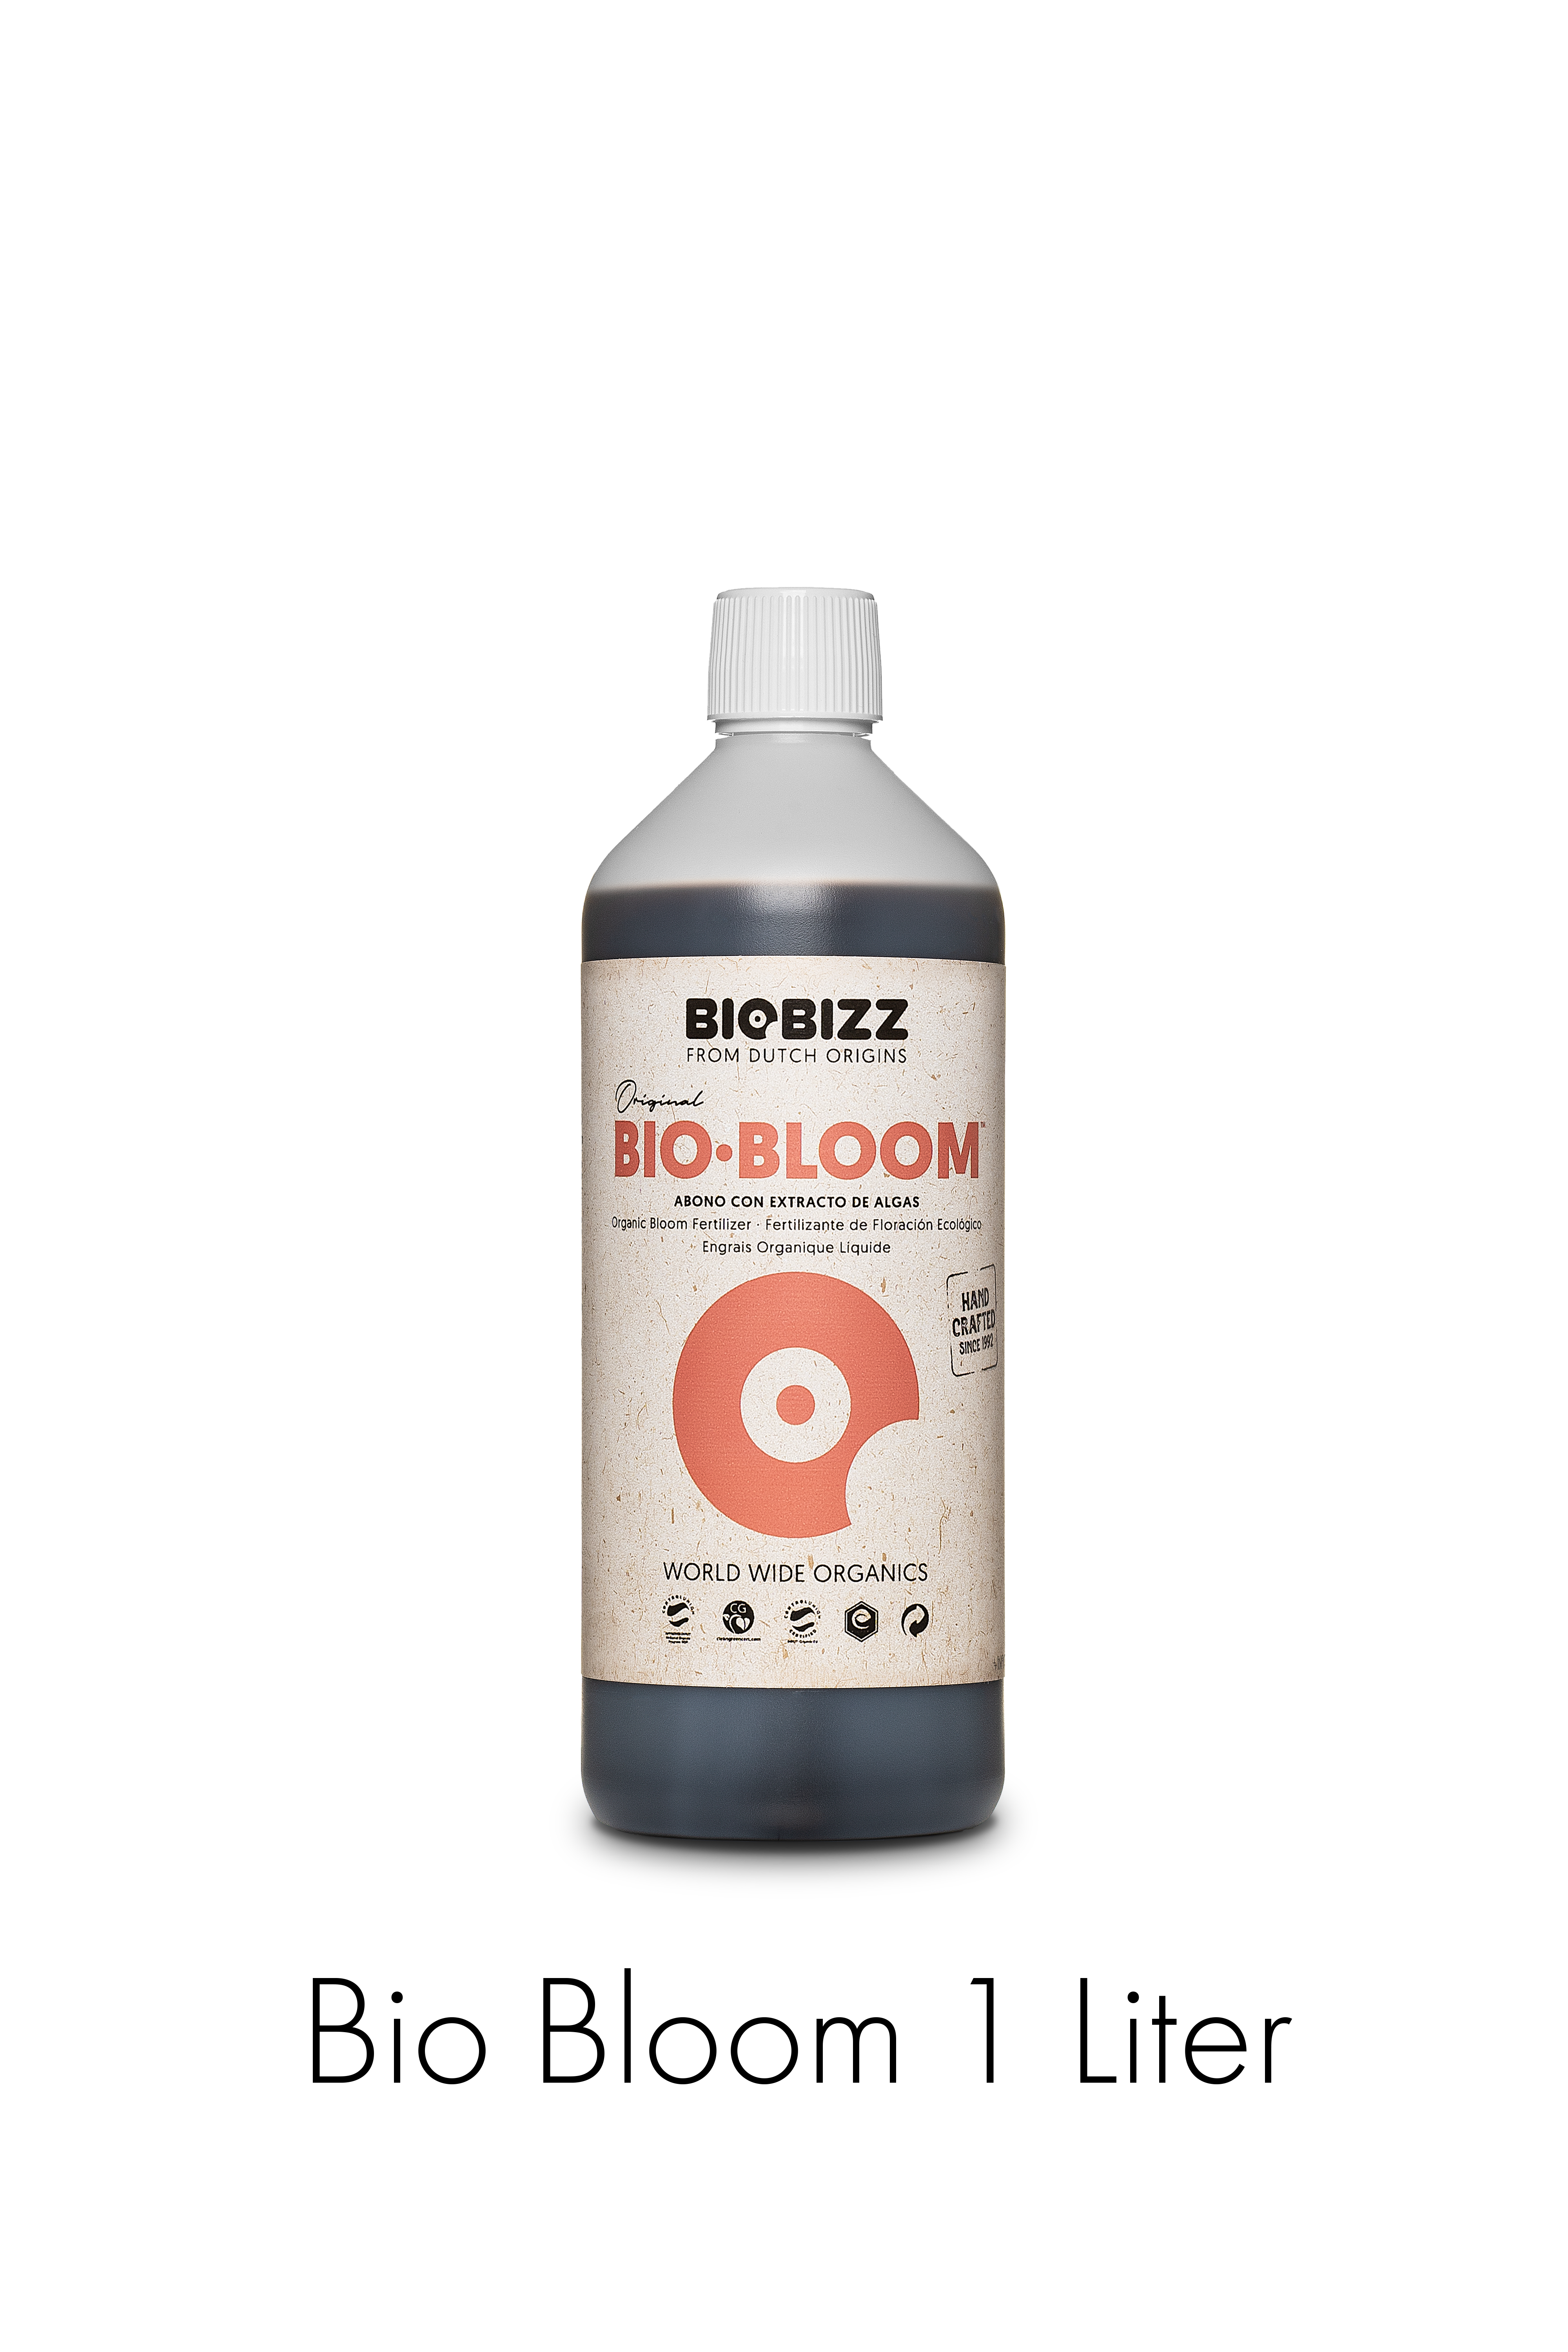 BioBizz Bio Bloom 5 l